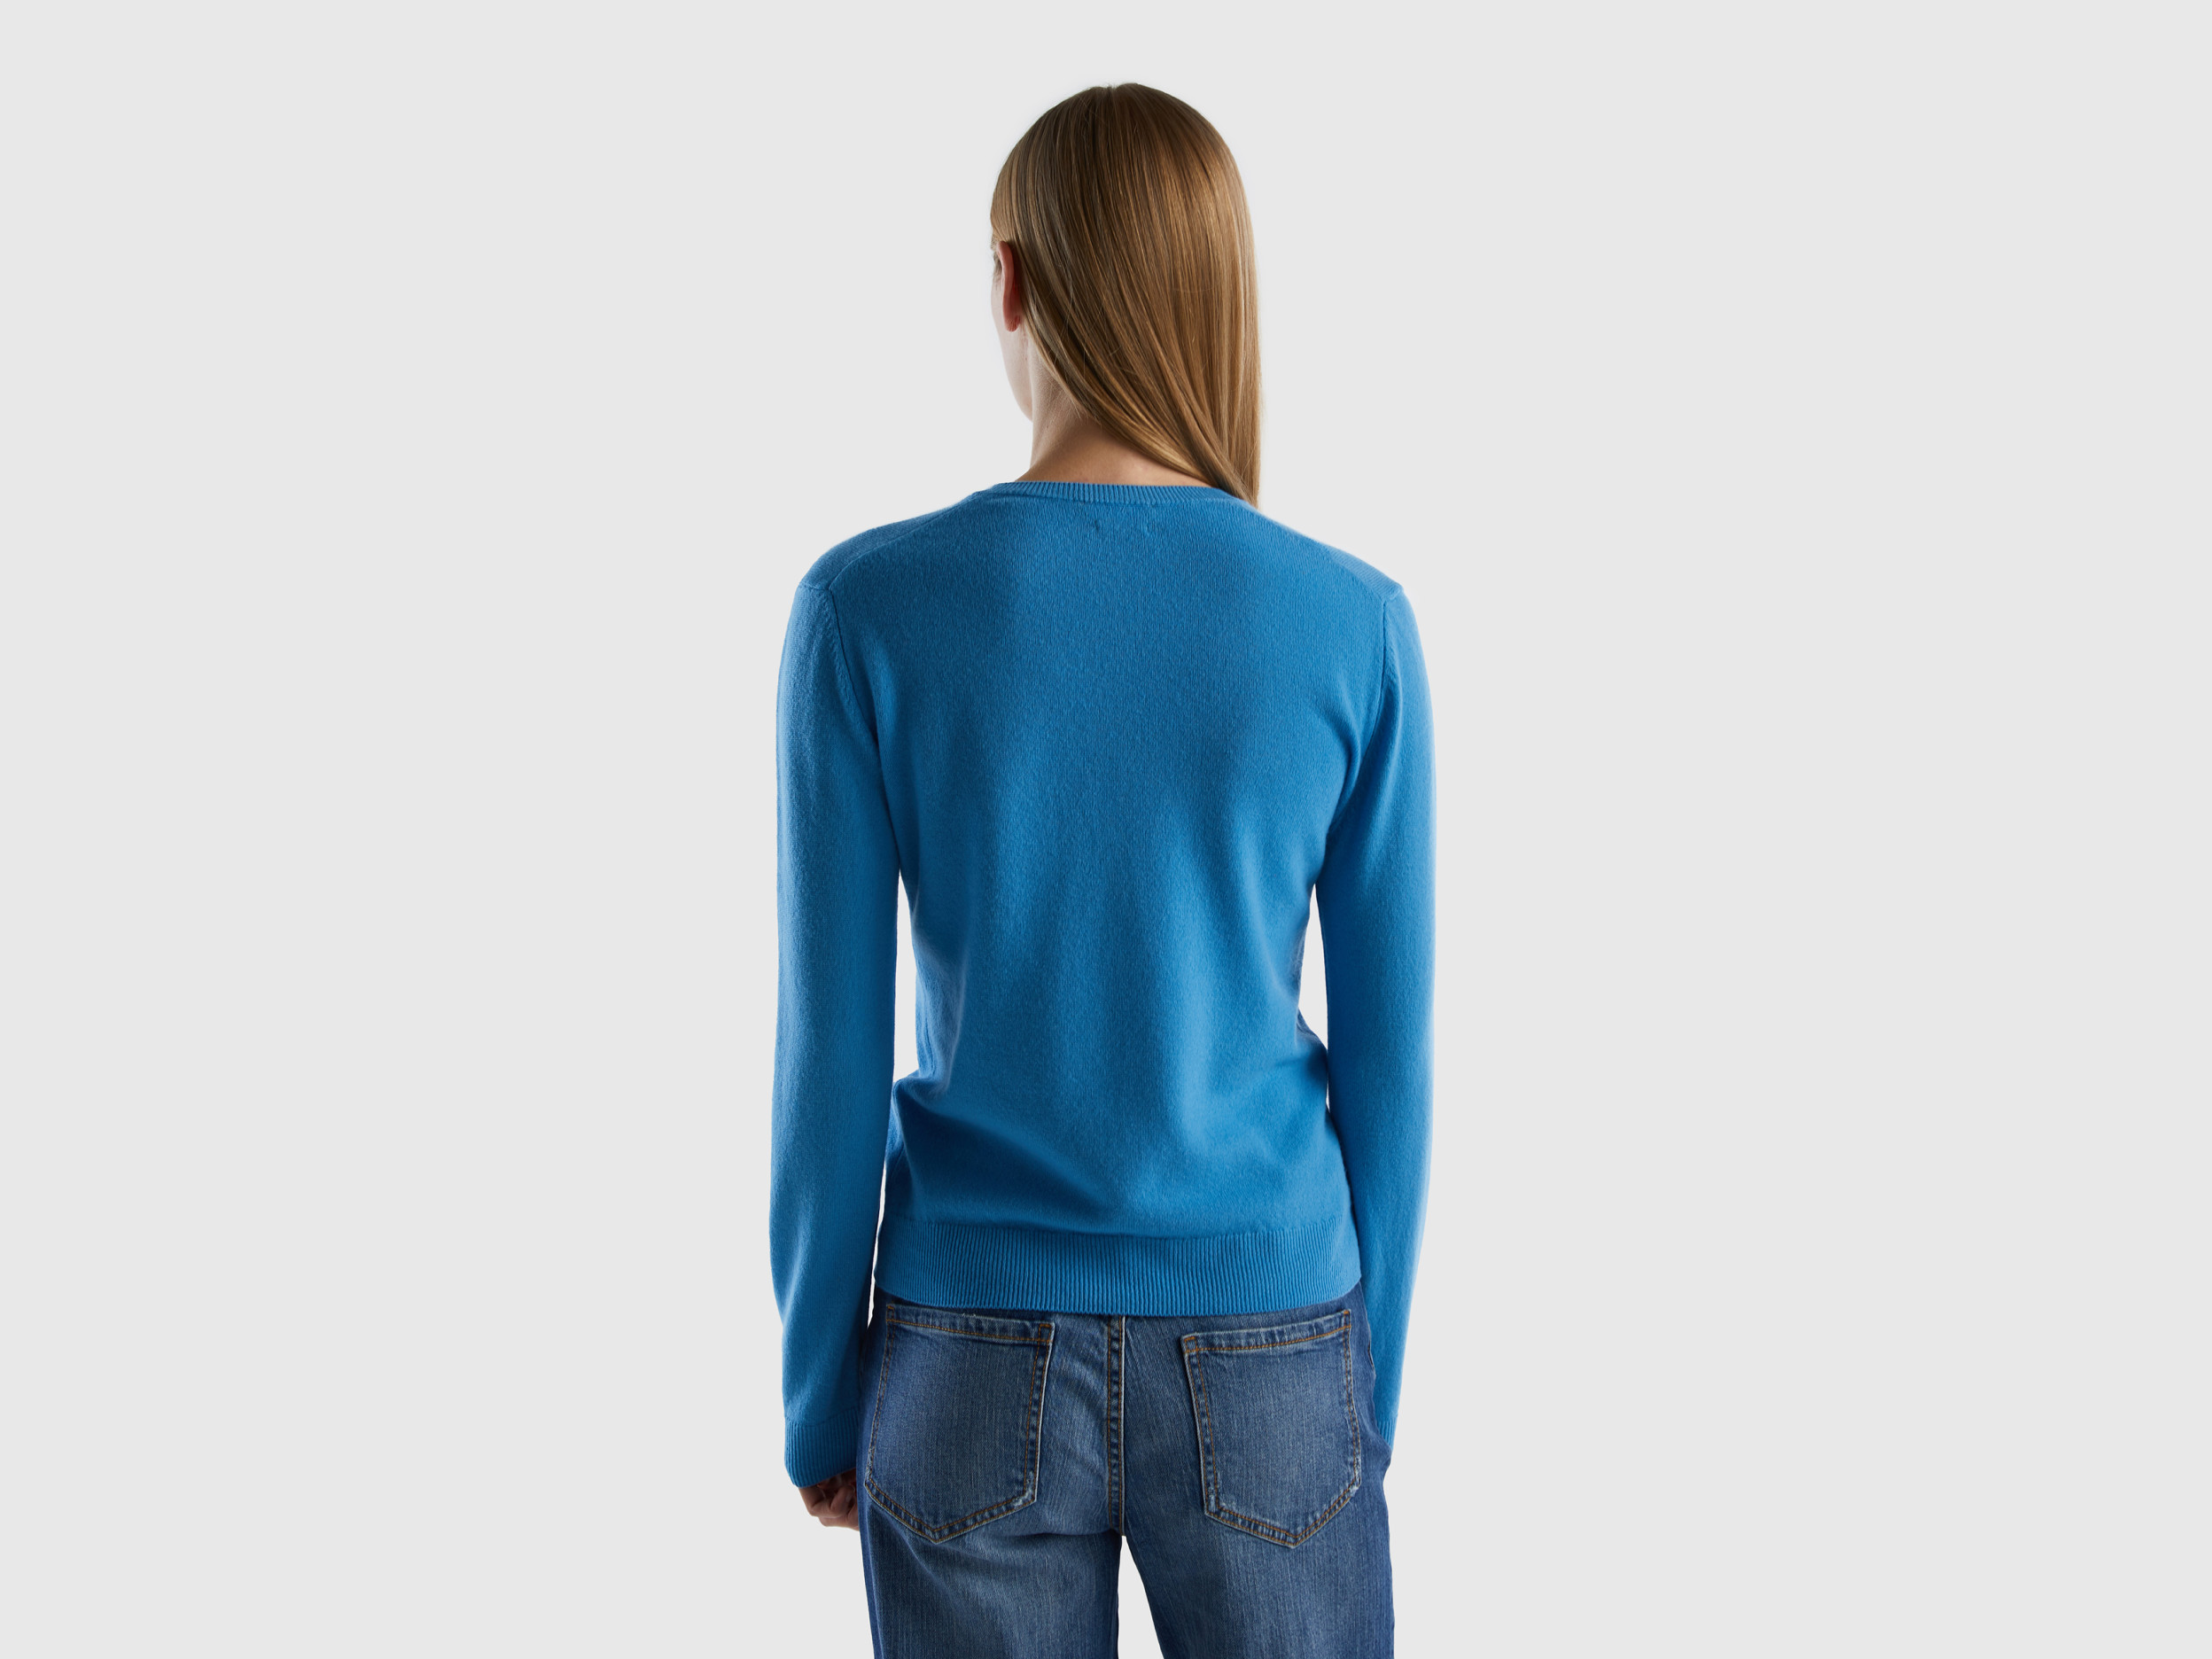 Benetton, Powder Blue V-Neck Sweater In Pure Merino Wool, Taglia L, Air Force Blue, Women